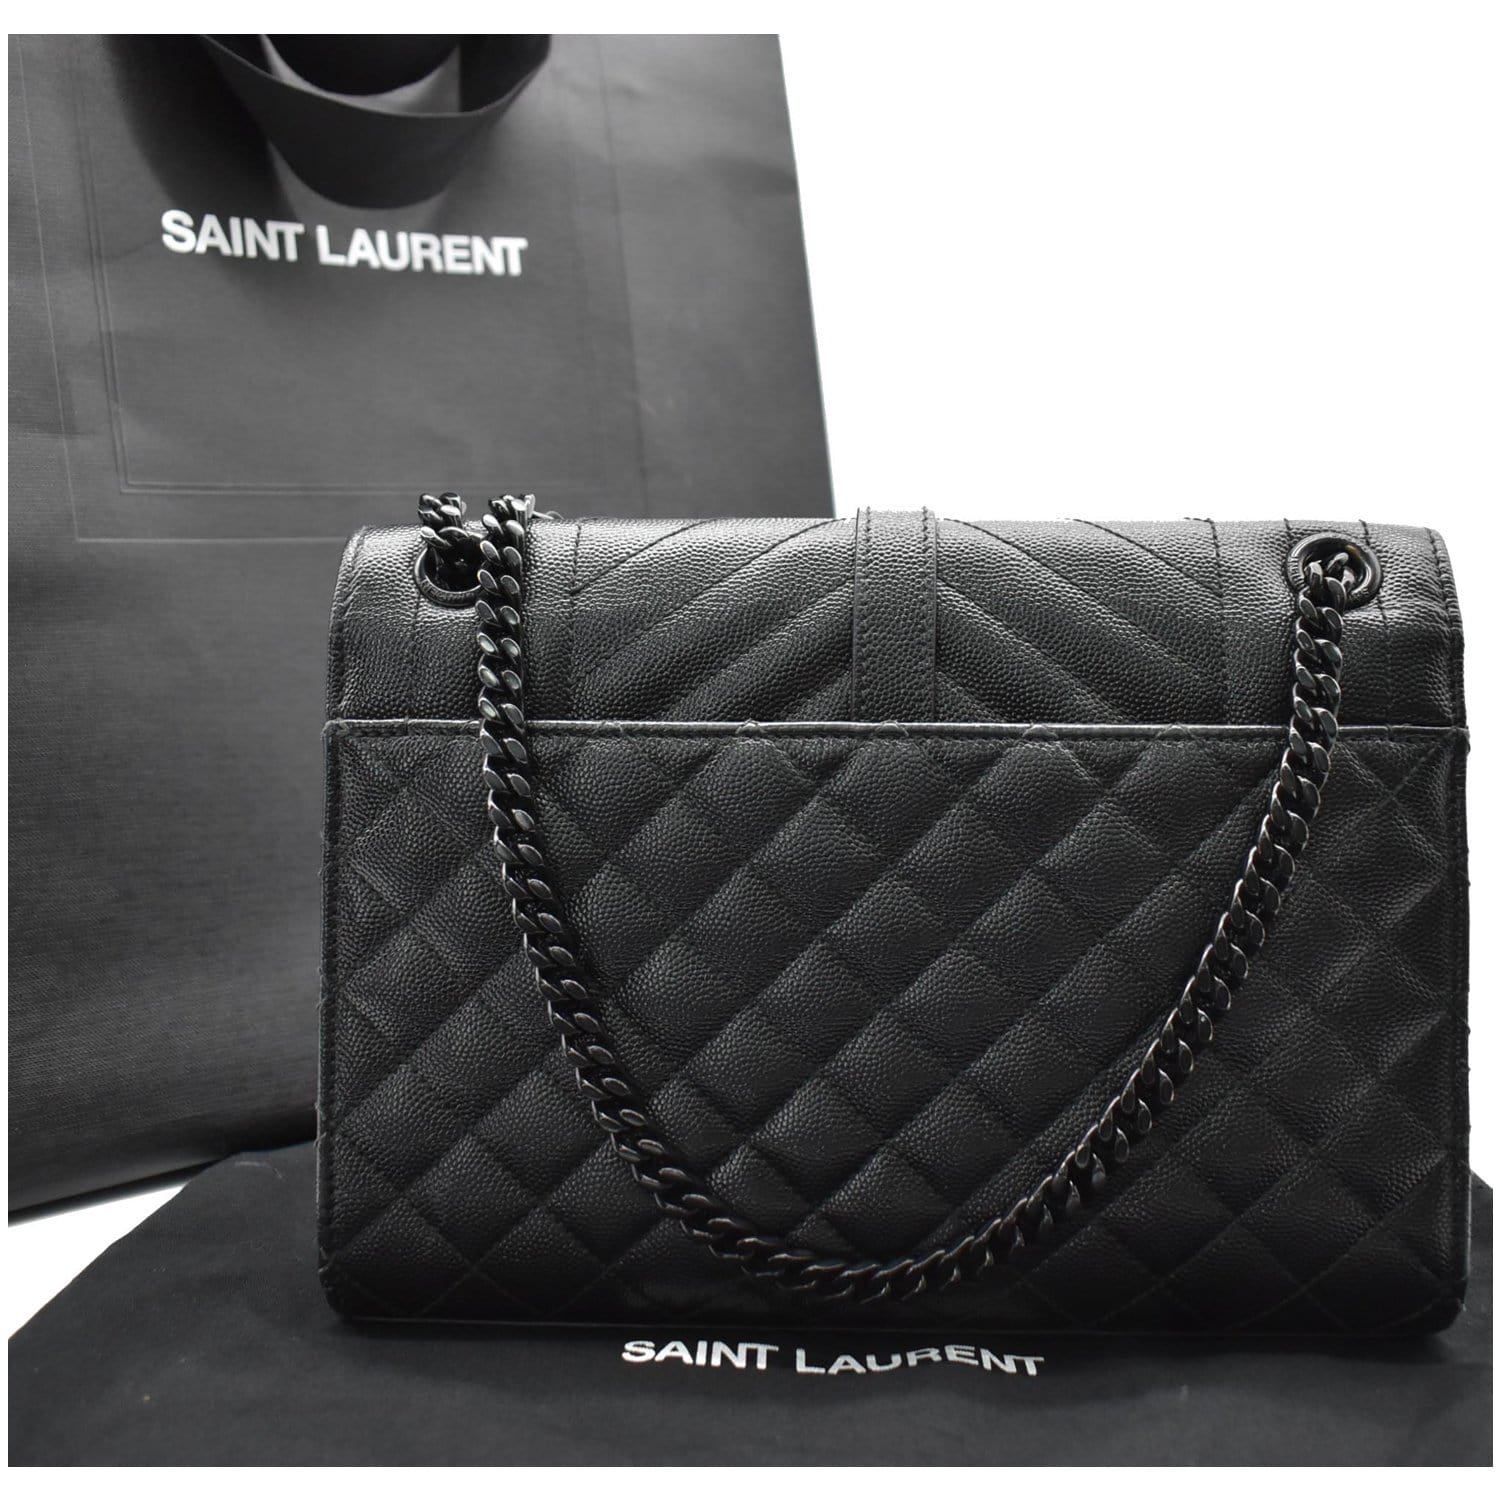 Yves Saint Laurent Envelope Chain Leather Crossbody Bag